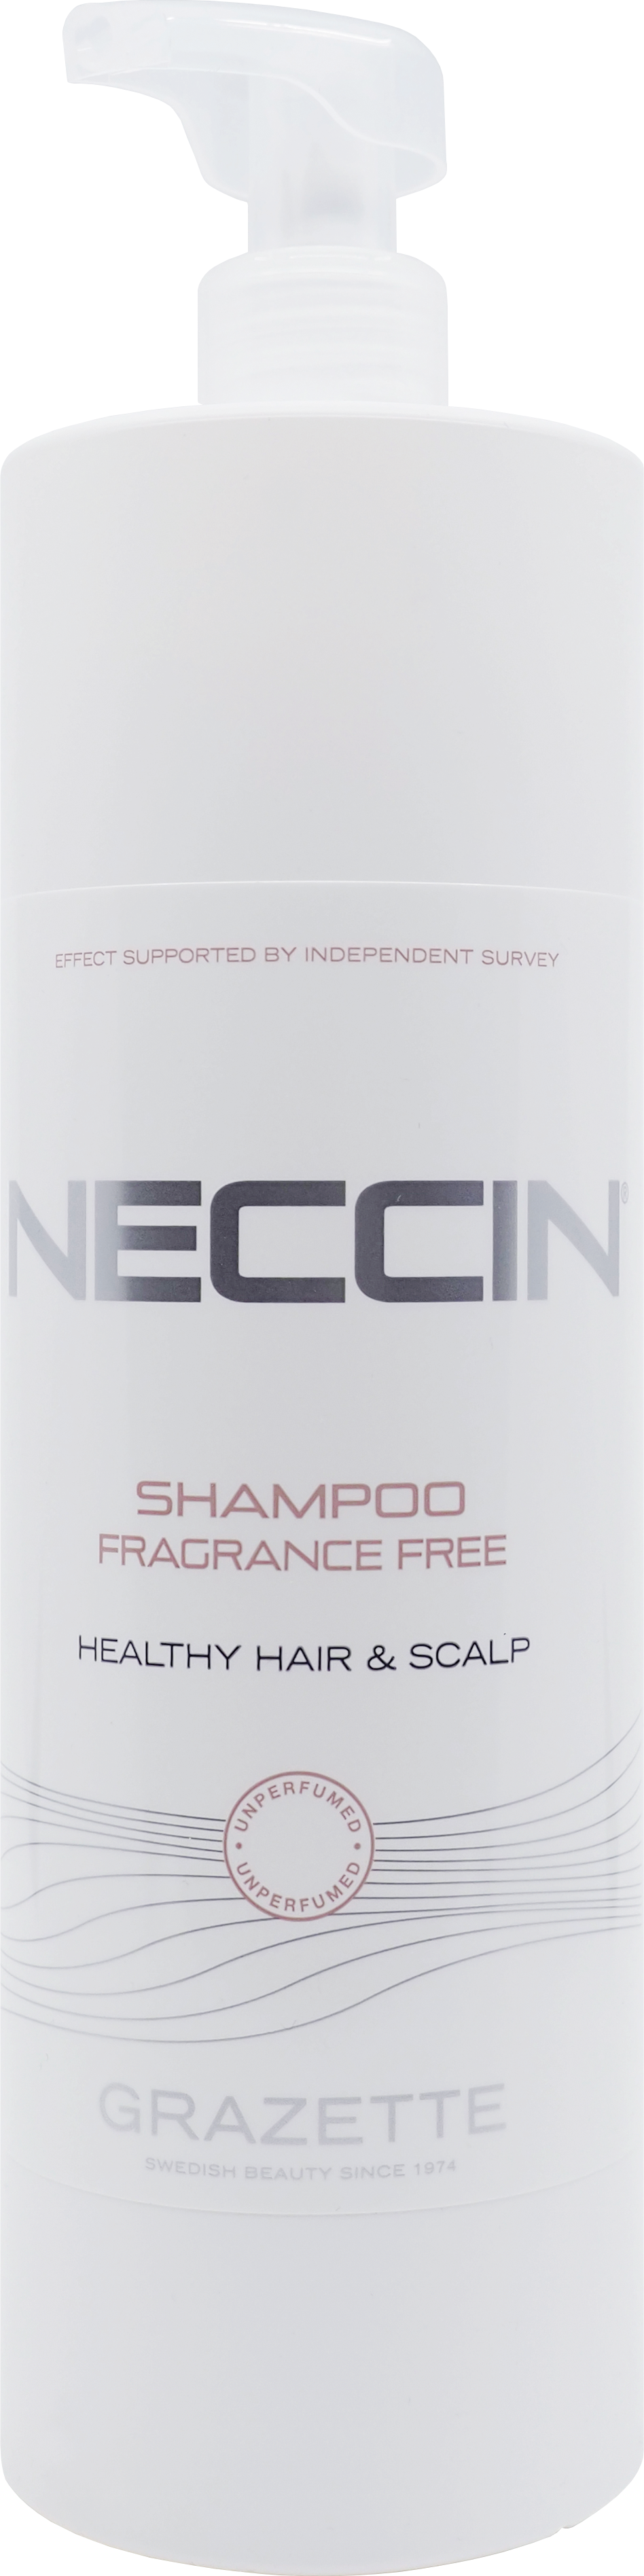 Grazette Neccin Shampoo Fragrance Free 1000 ml lyko.com